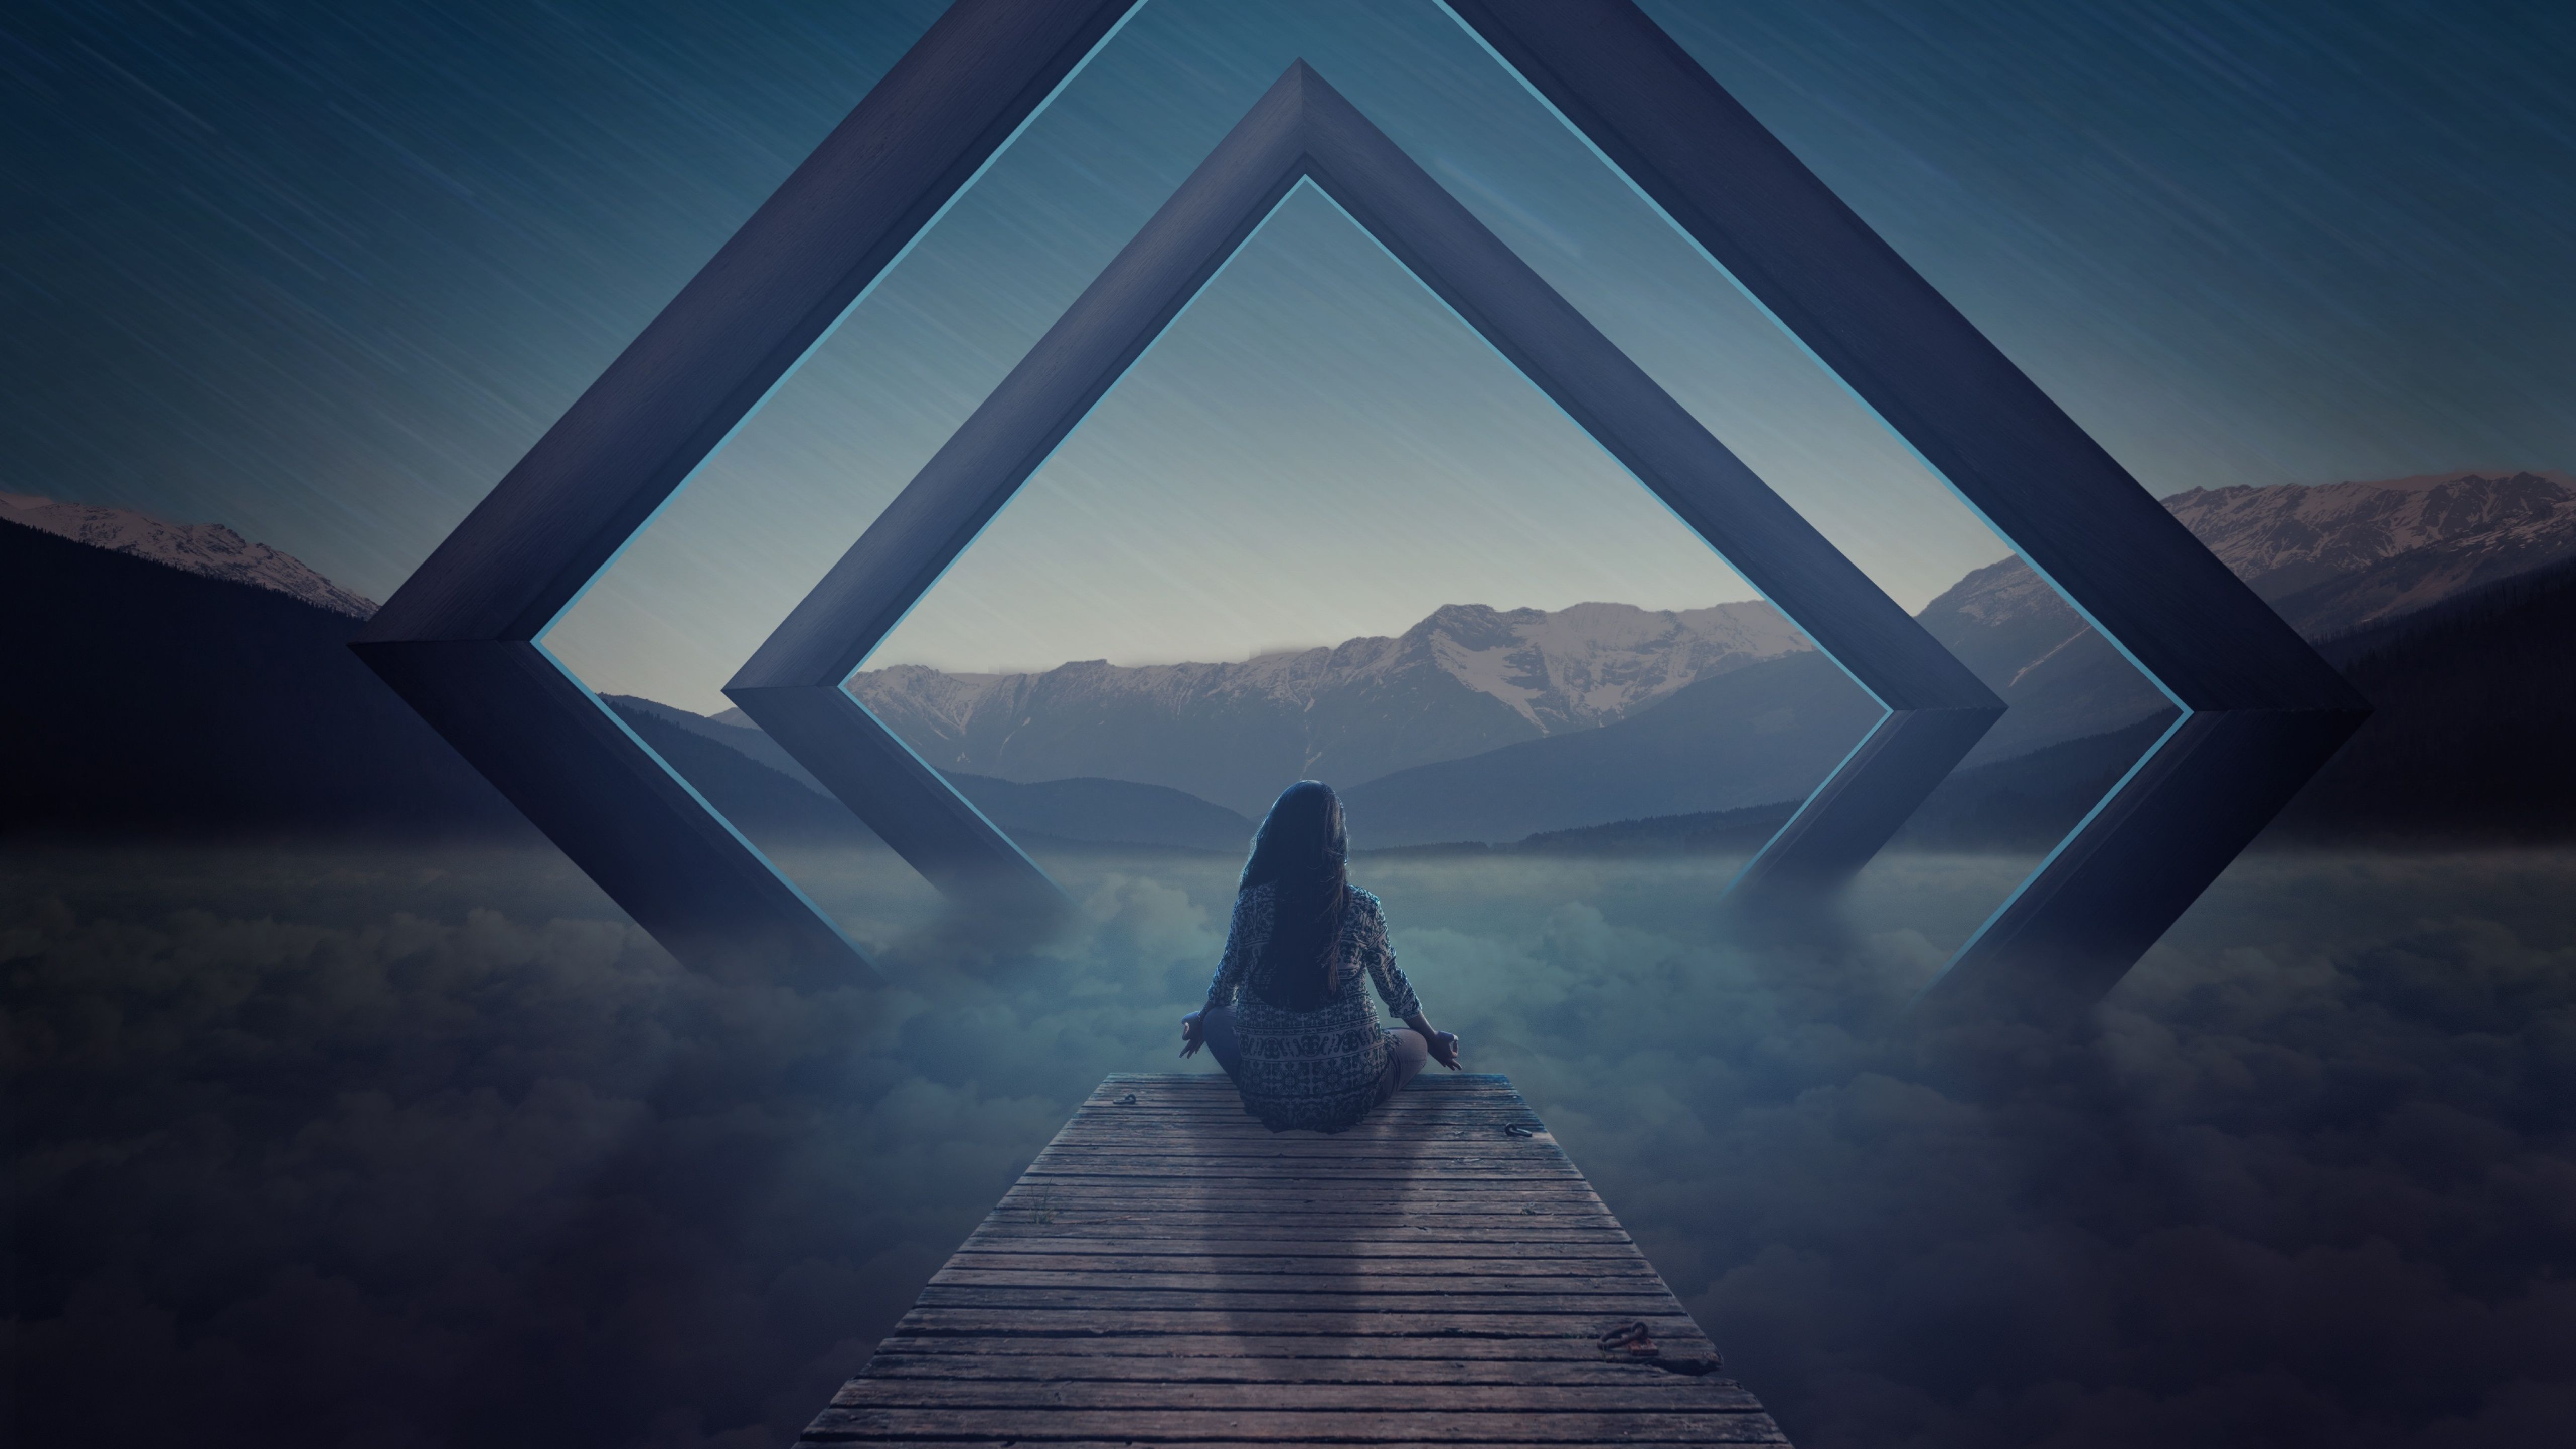 A woman sitting on the edge of some rocks - Spiritual